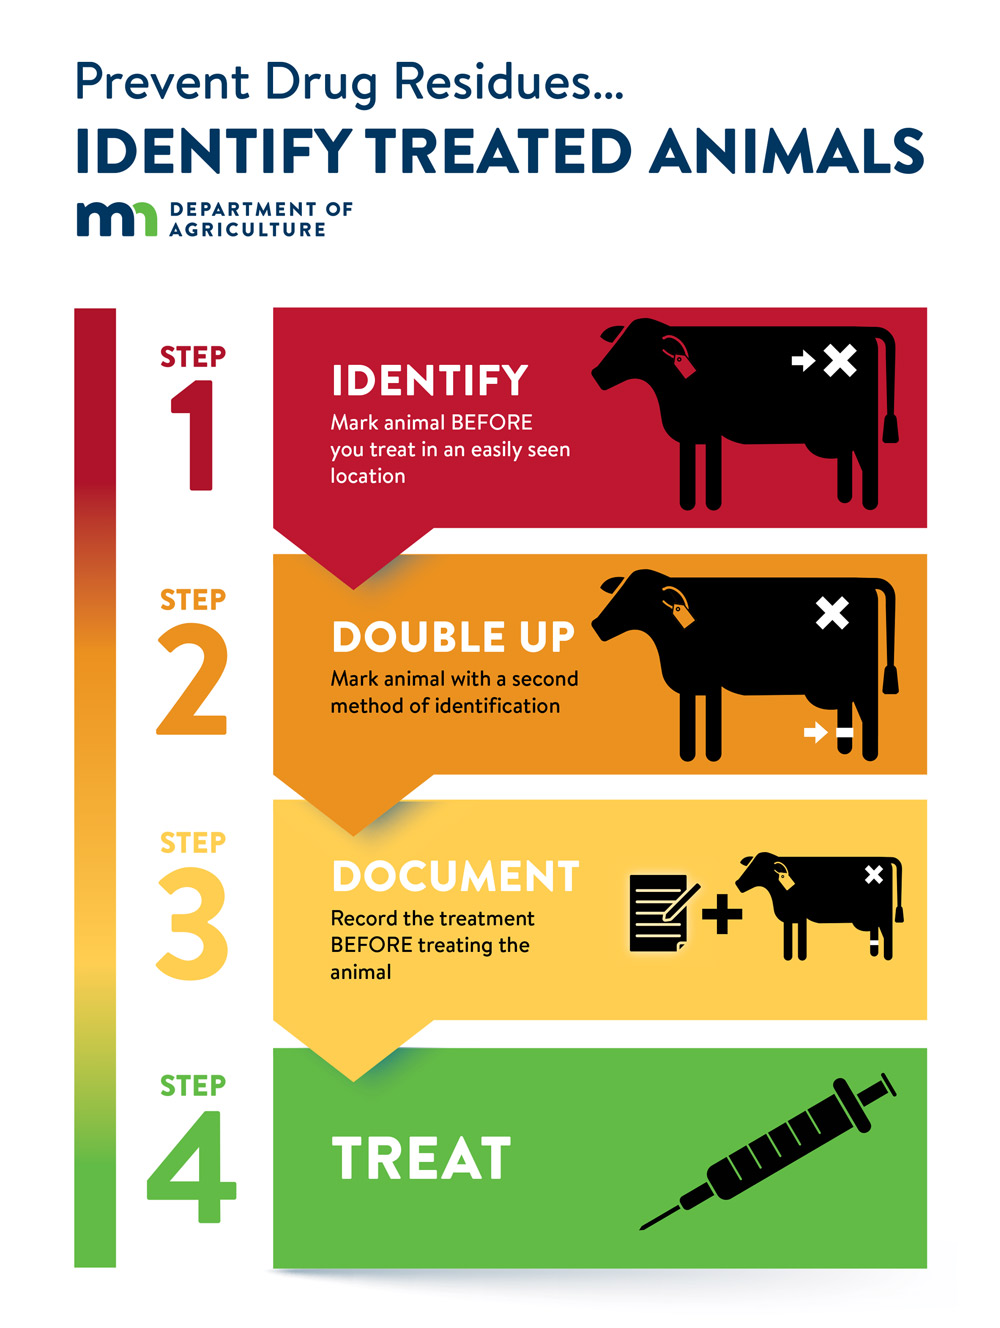 Identify treated animals